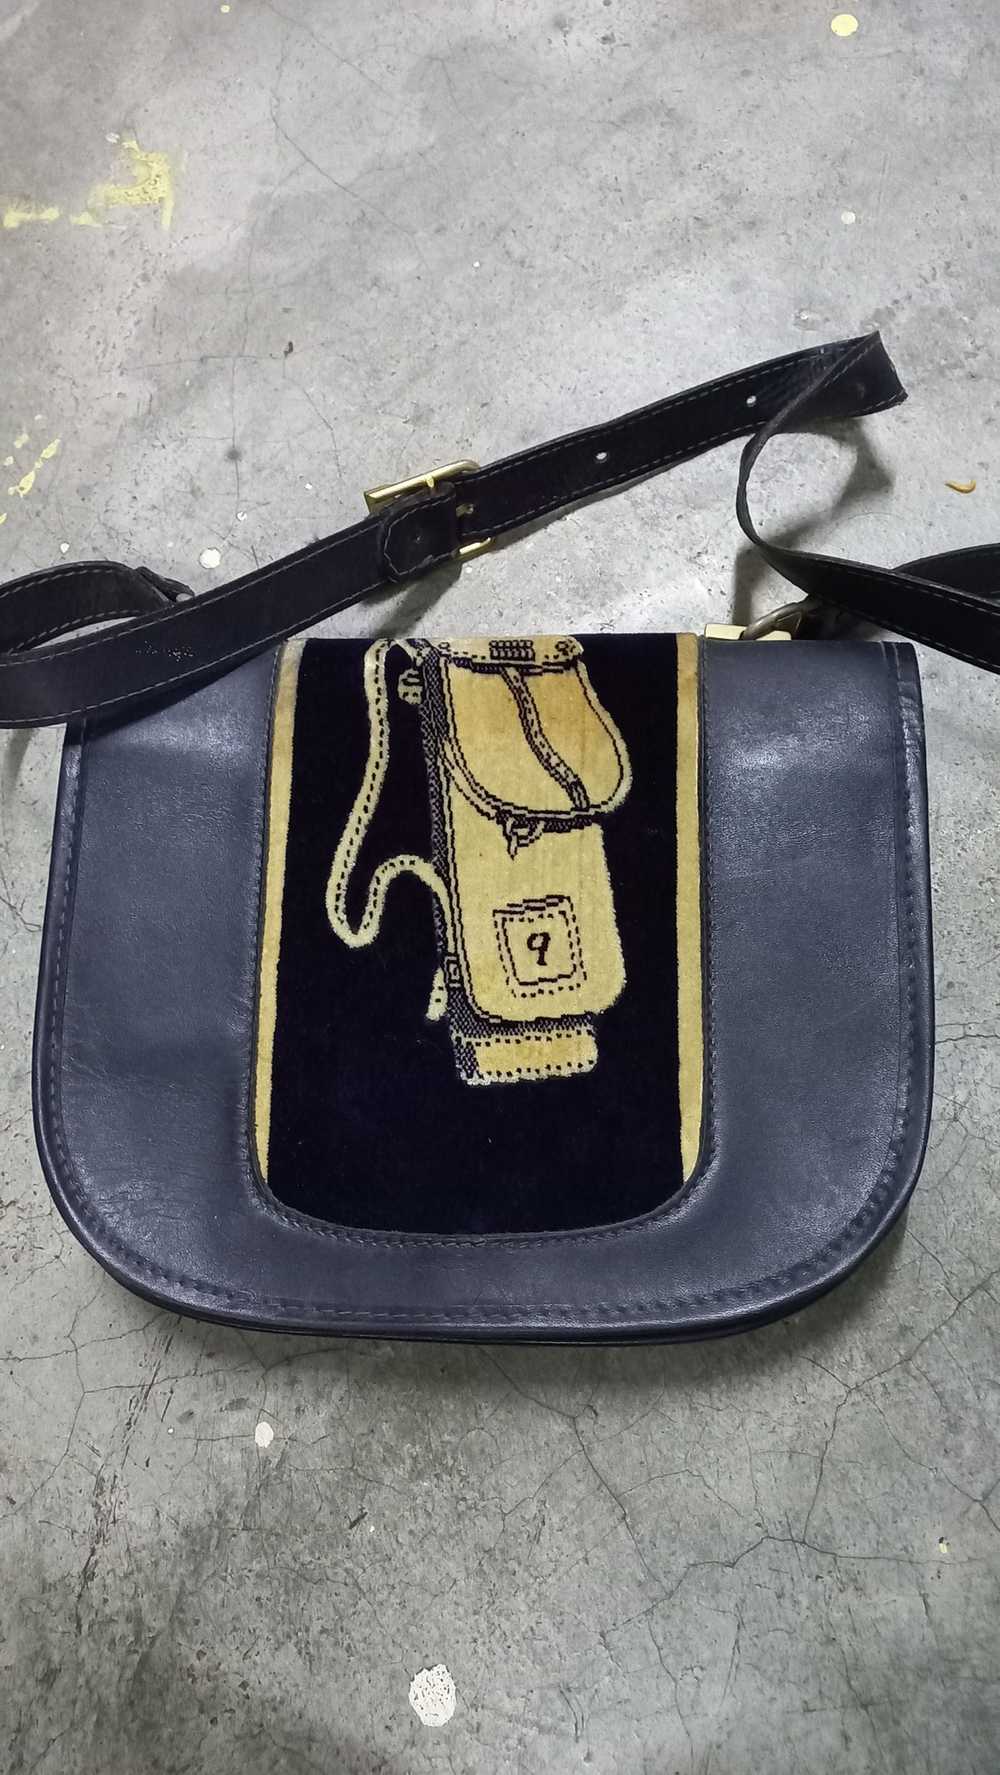 Principe Principe leather sling bag - image 1